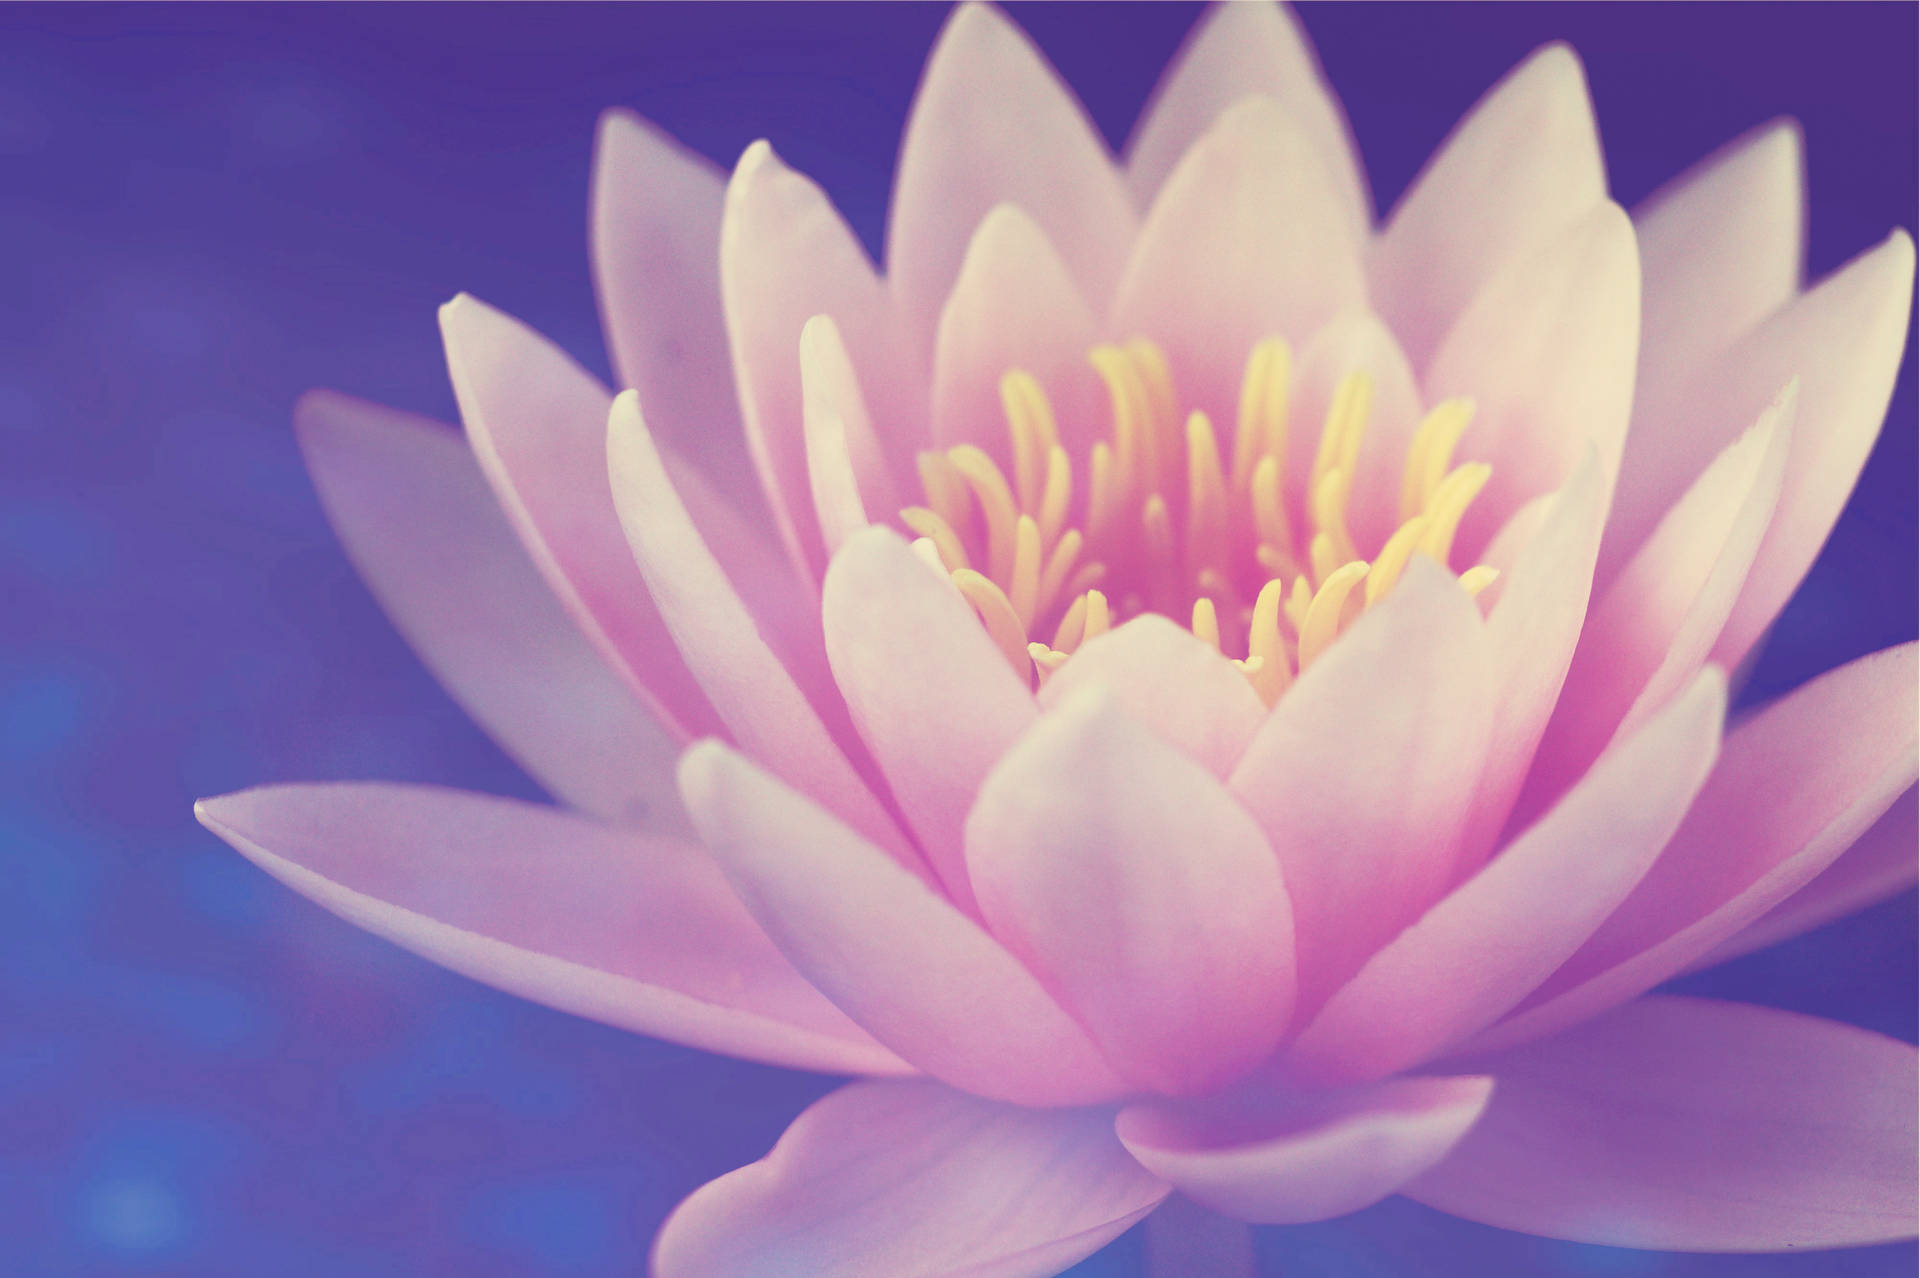 Blossomed Lotus Flower Background